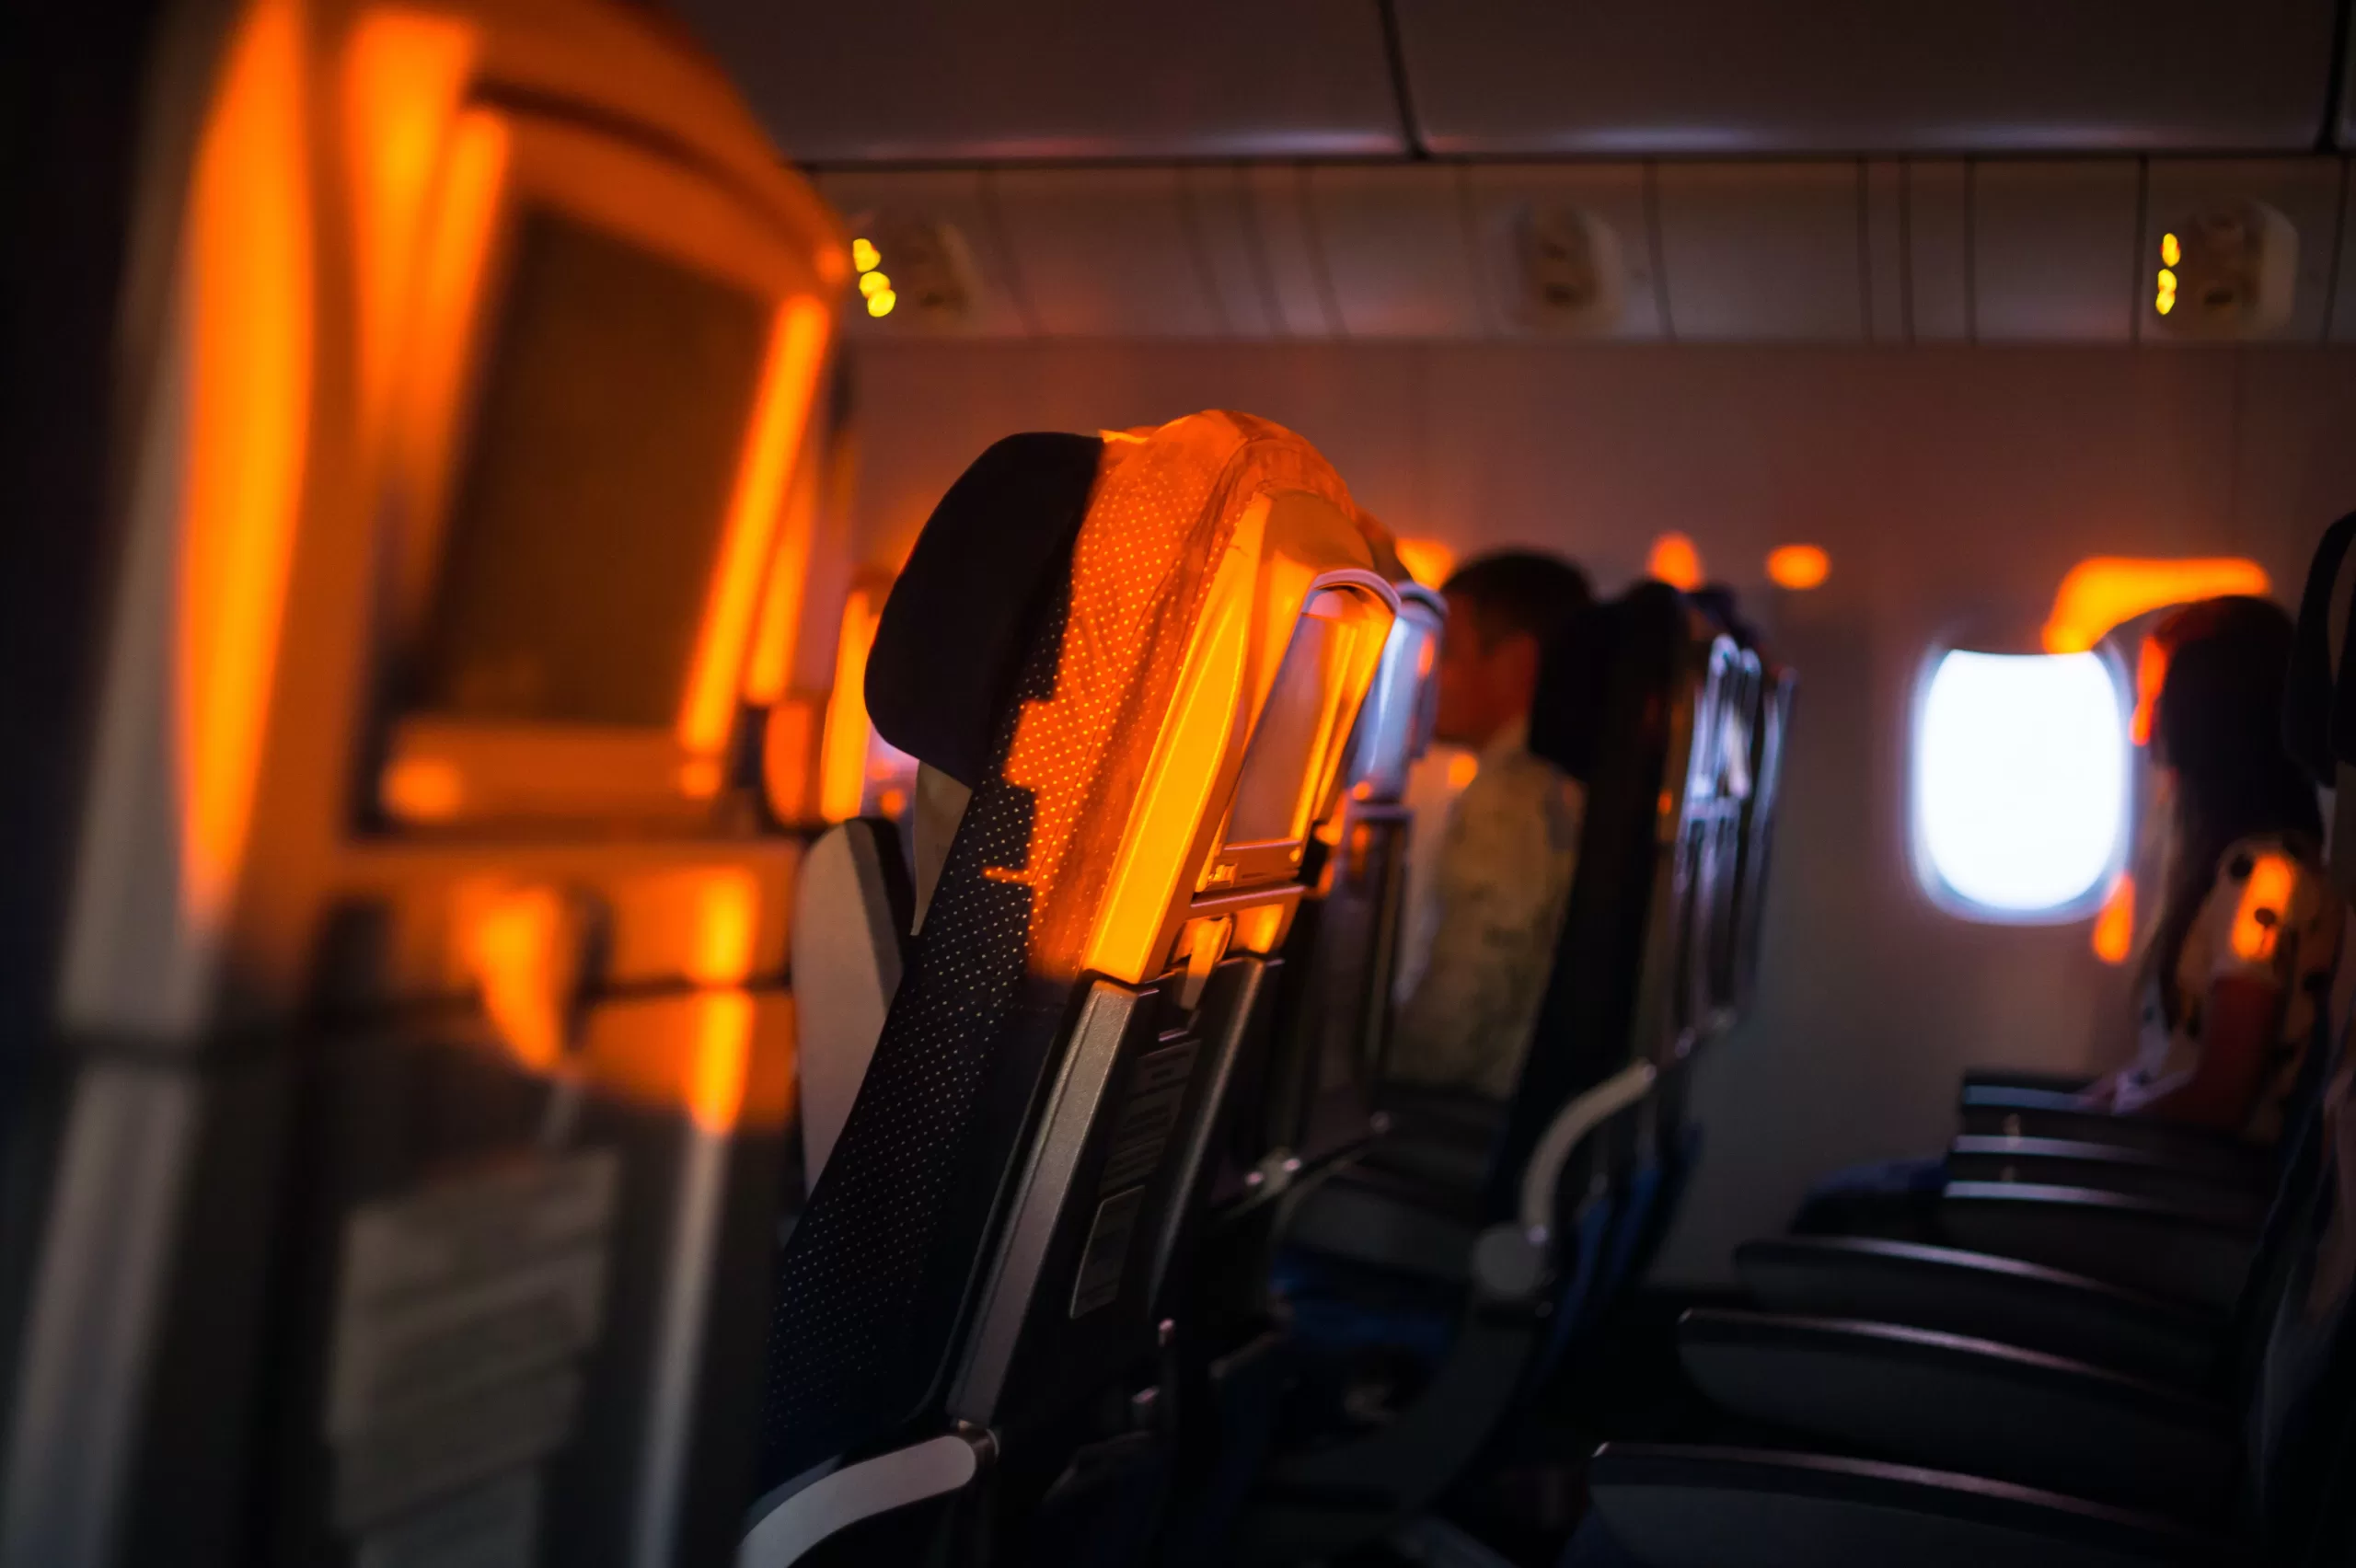 aeroplane seats